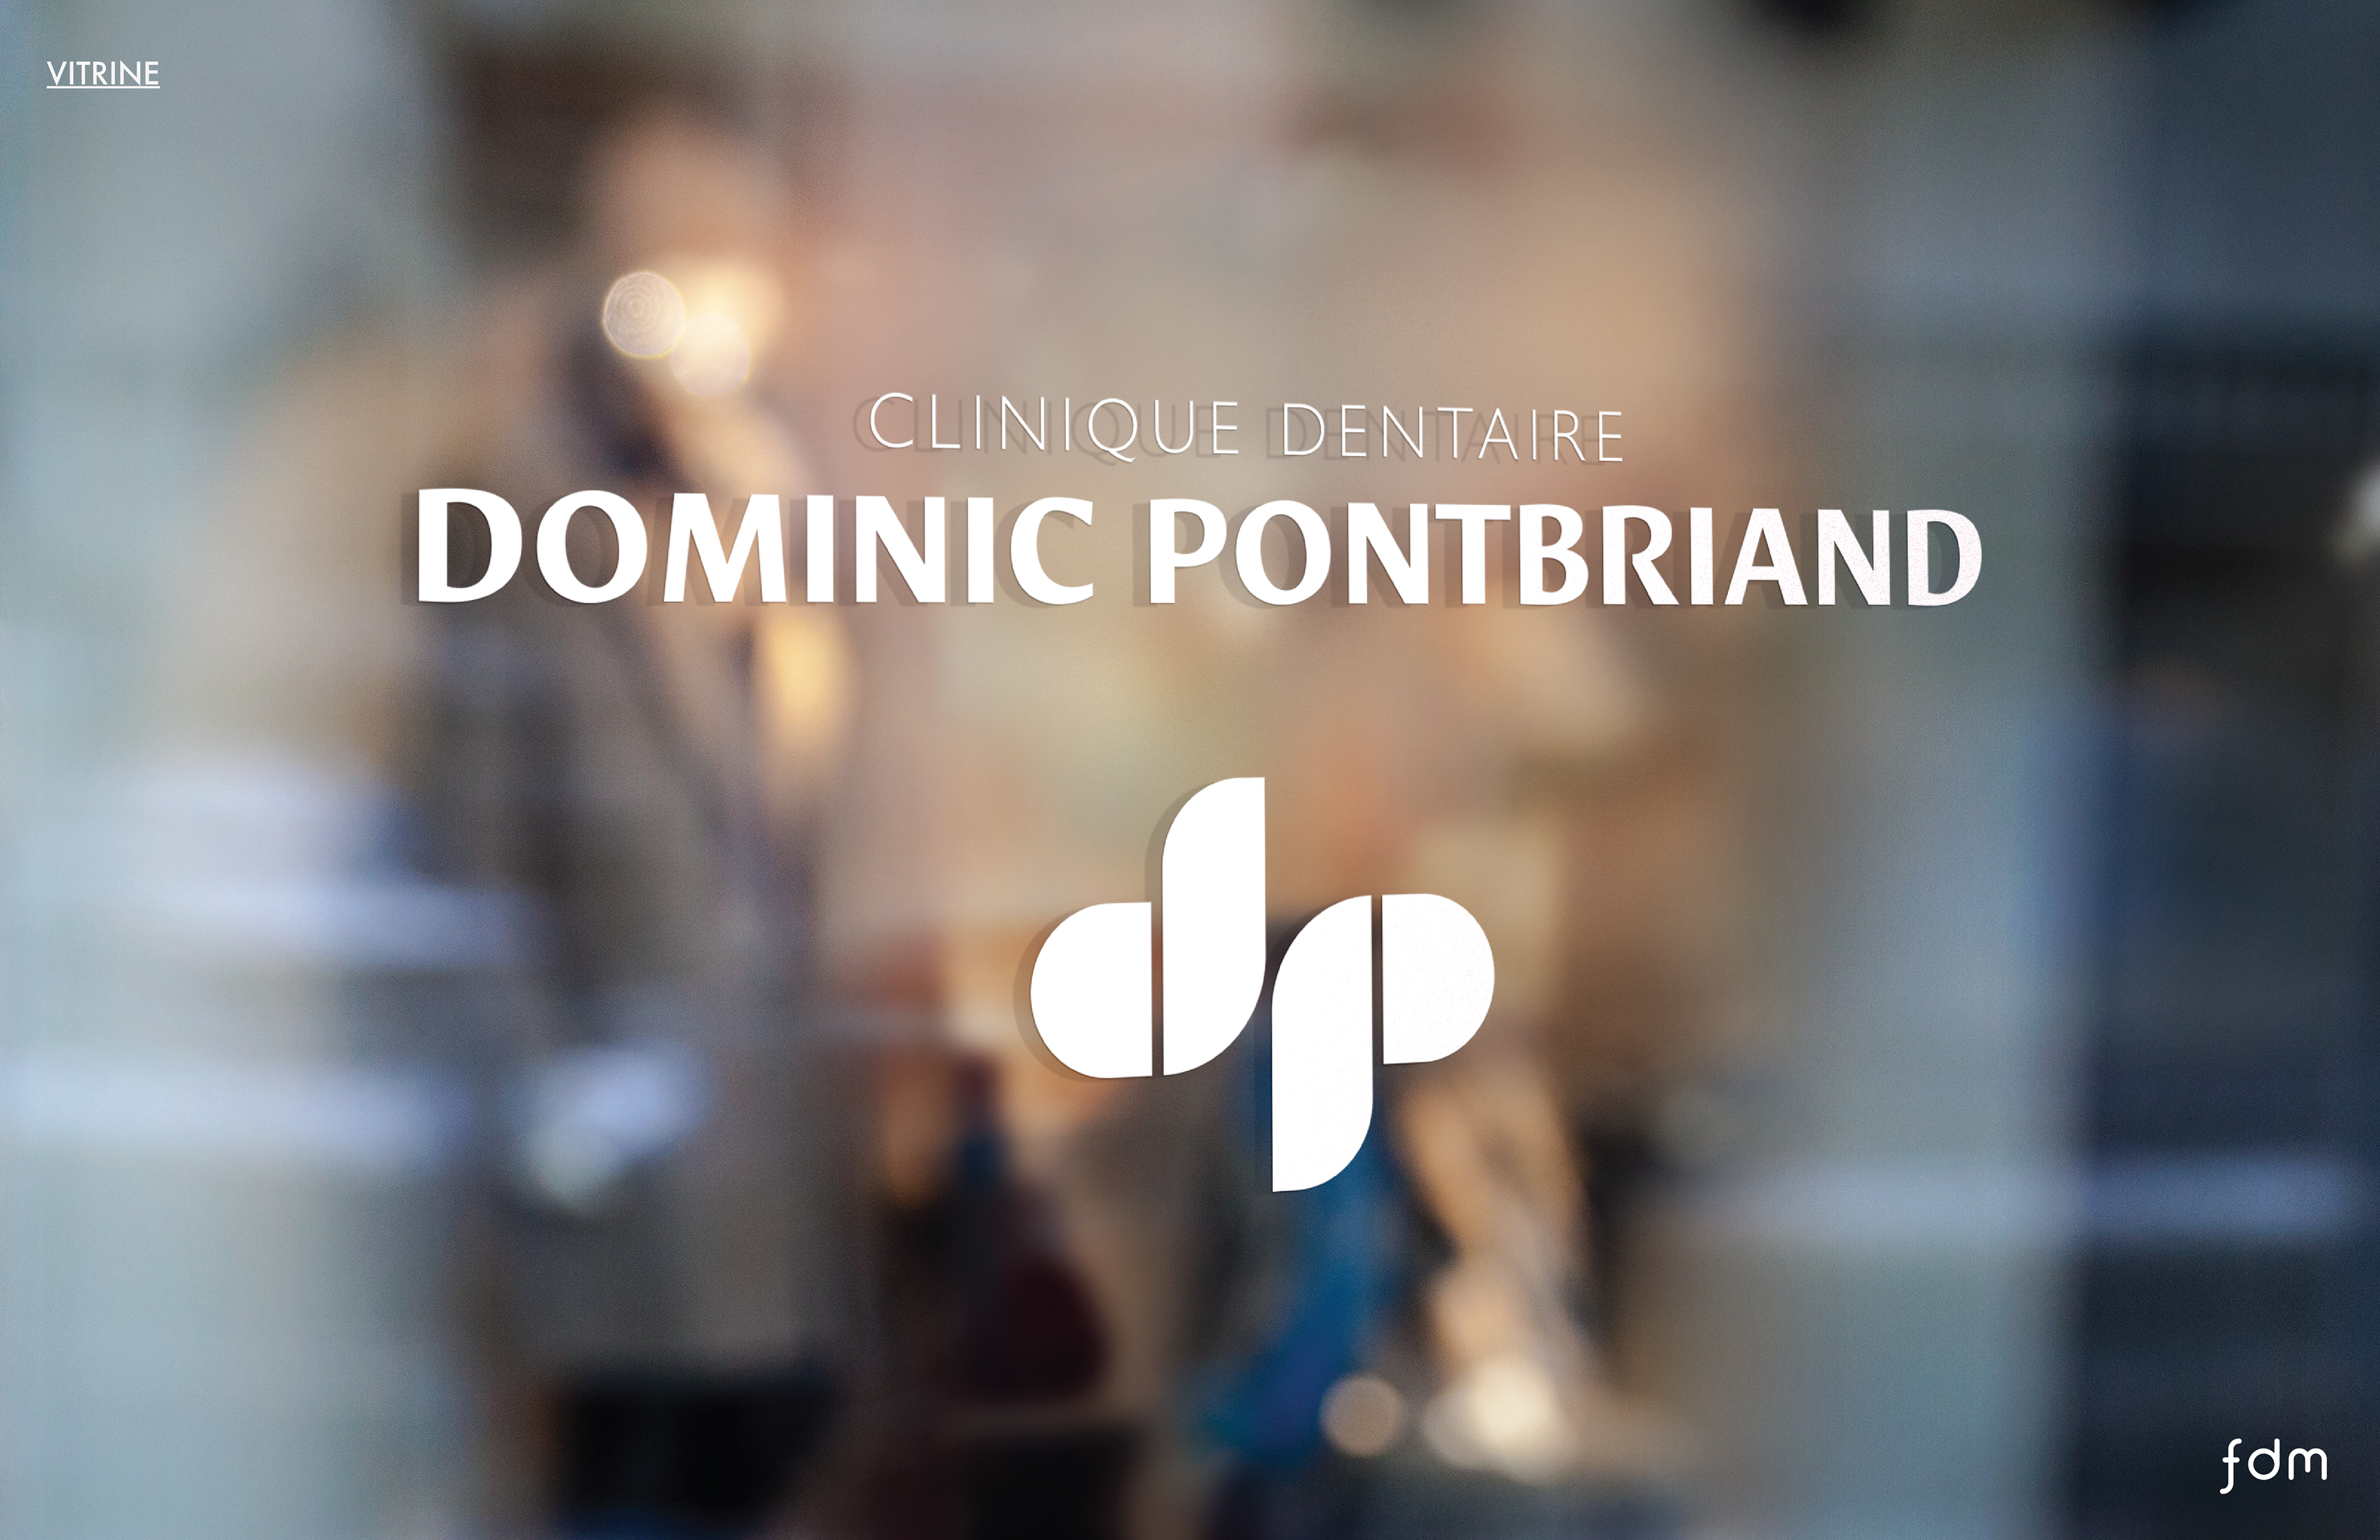 Prothèses dentaires - Clinique Dentaire Dominic Pontbriand